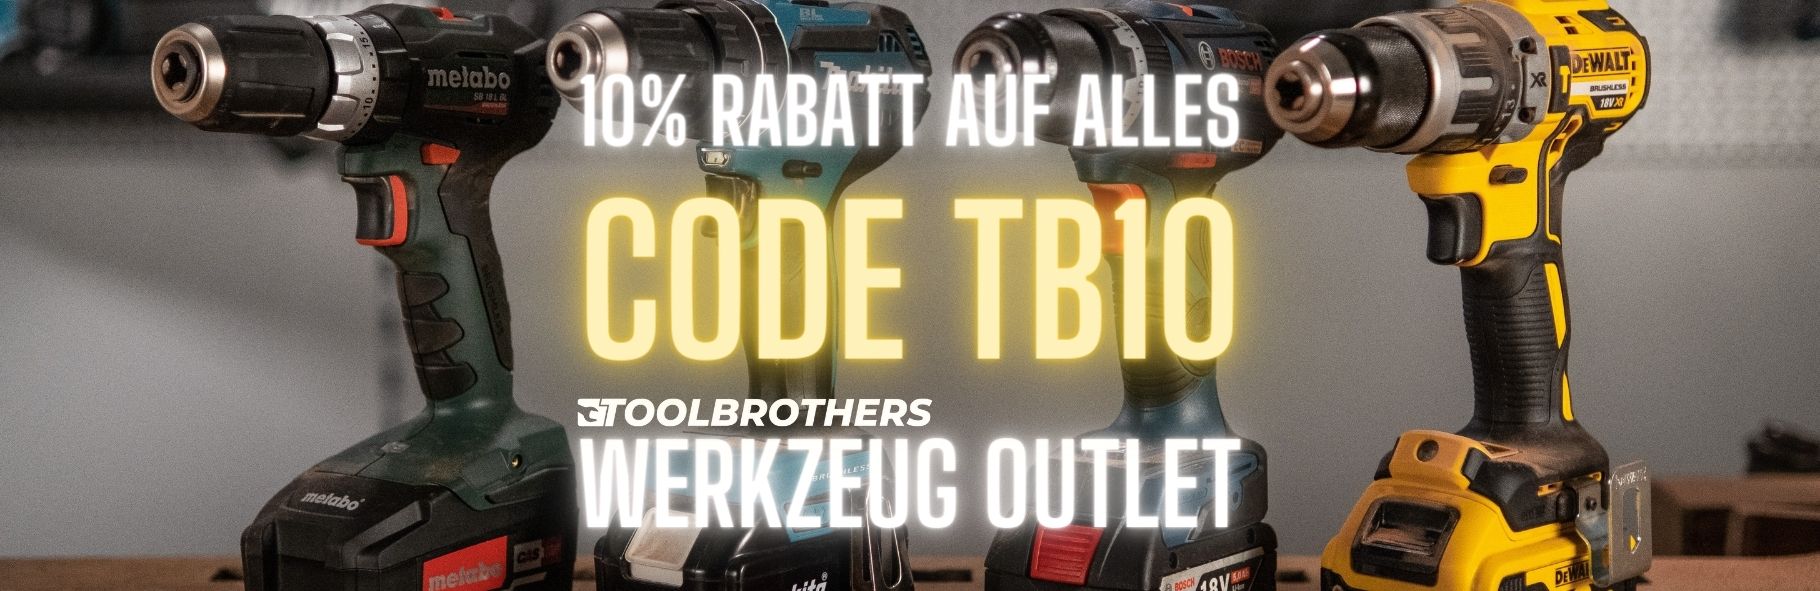 Toolbrothers Werkzeug Outlet